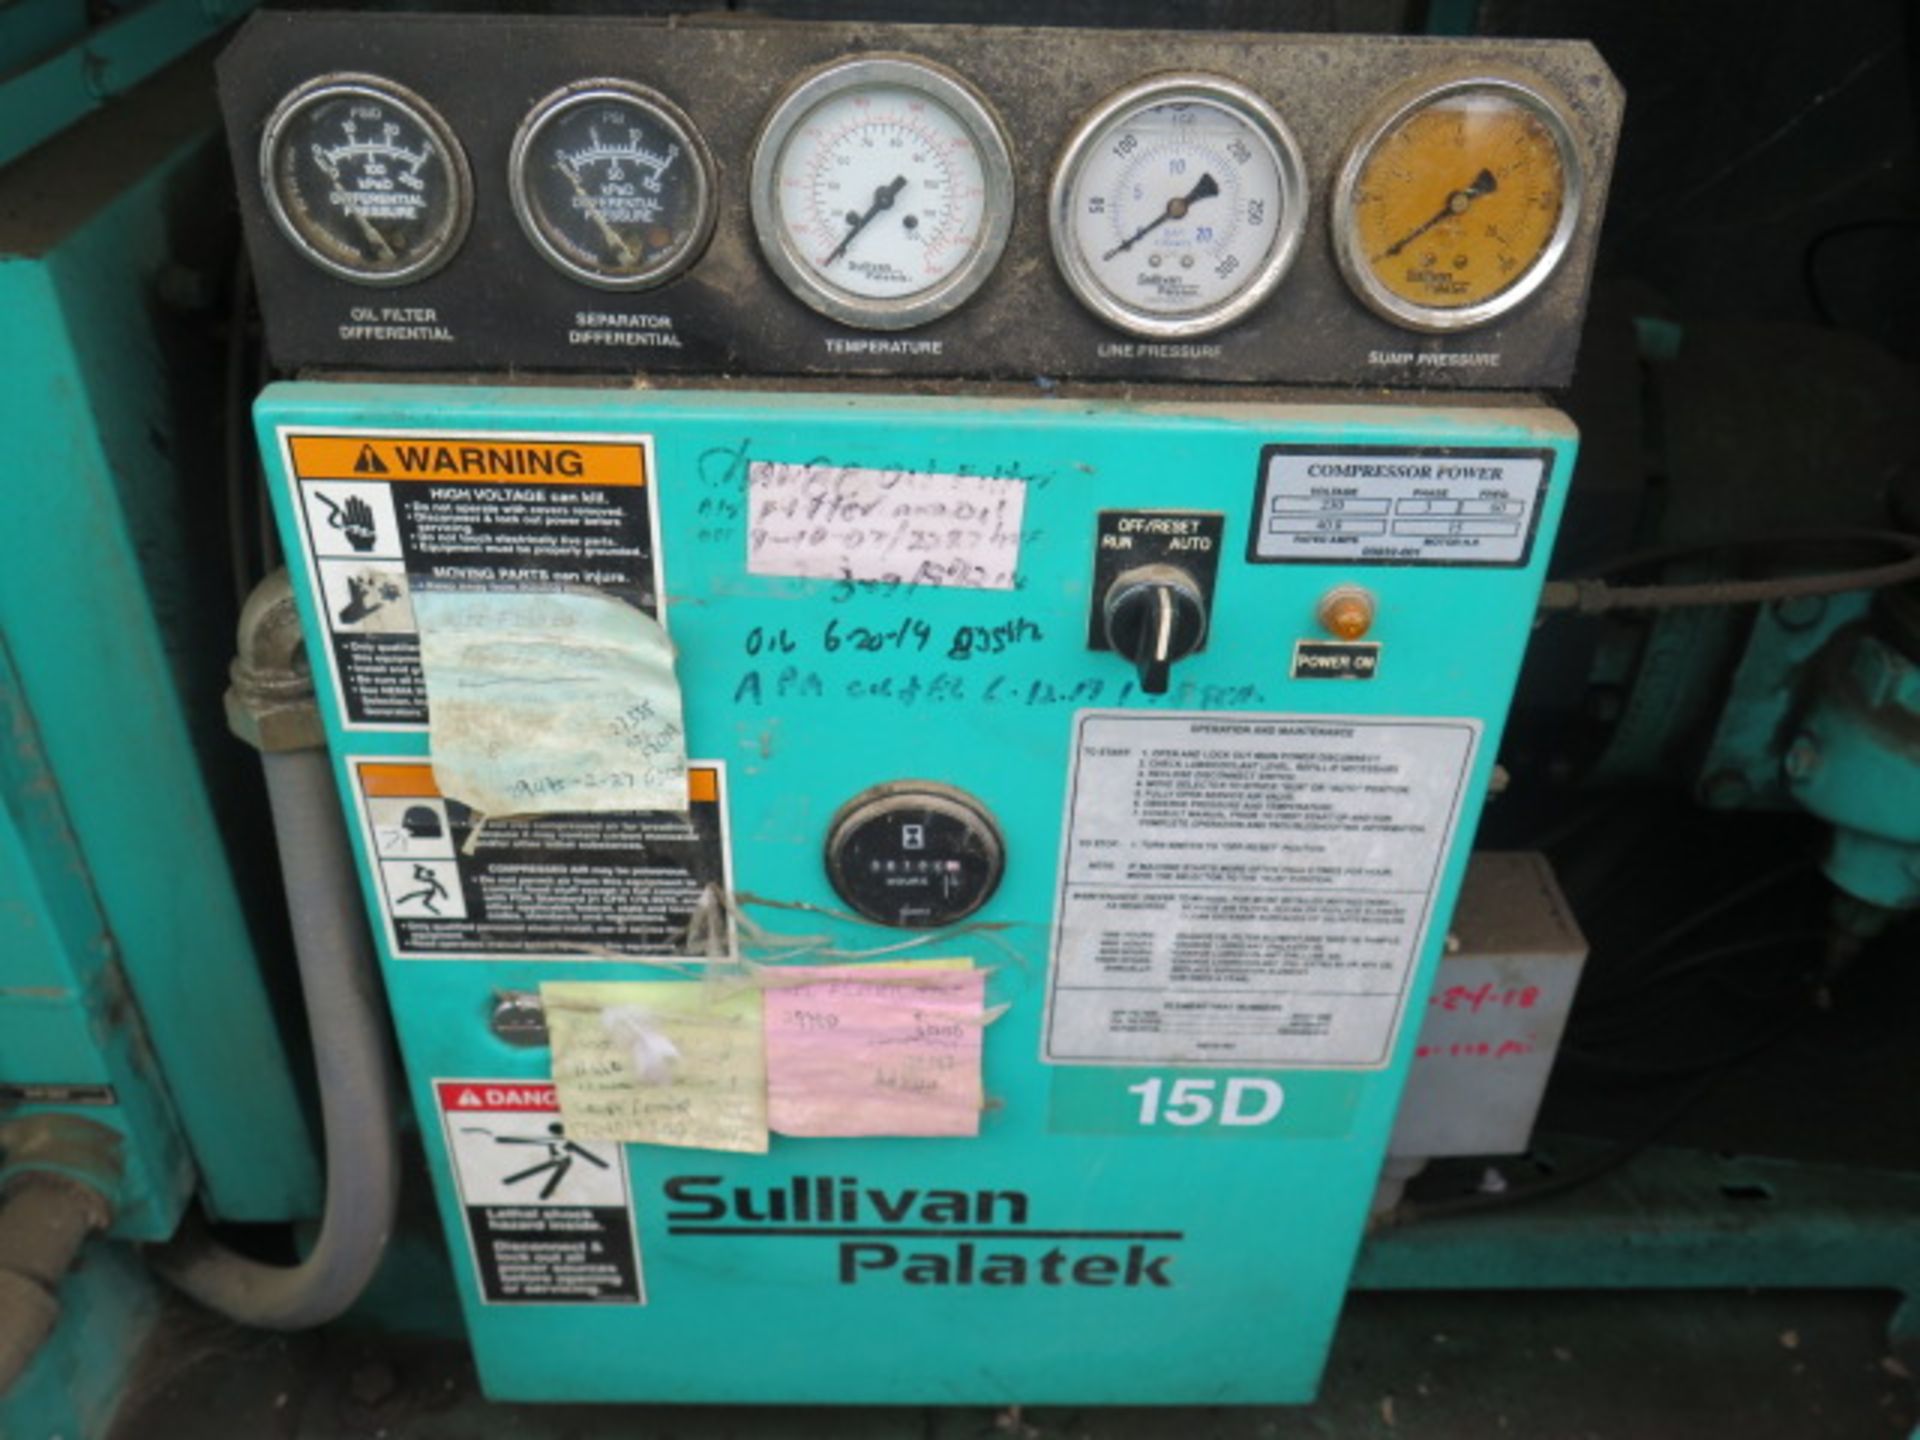 Sullivan Palatek mdl. 15DT 15Hp Rotary Vane Air Compressor s/n 07D002 w/ 125 PSIG, 36,132 Hours ( - Image 5 of 8